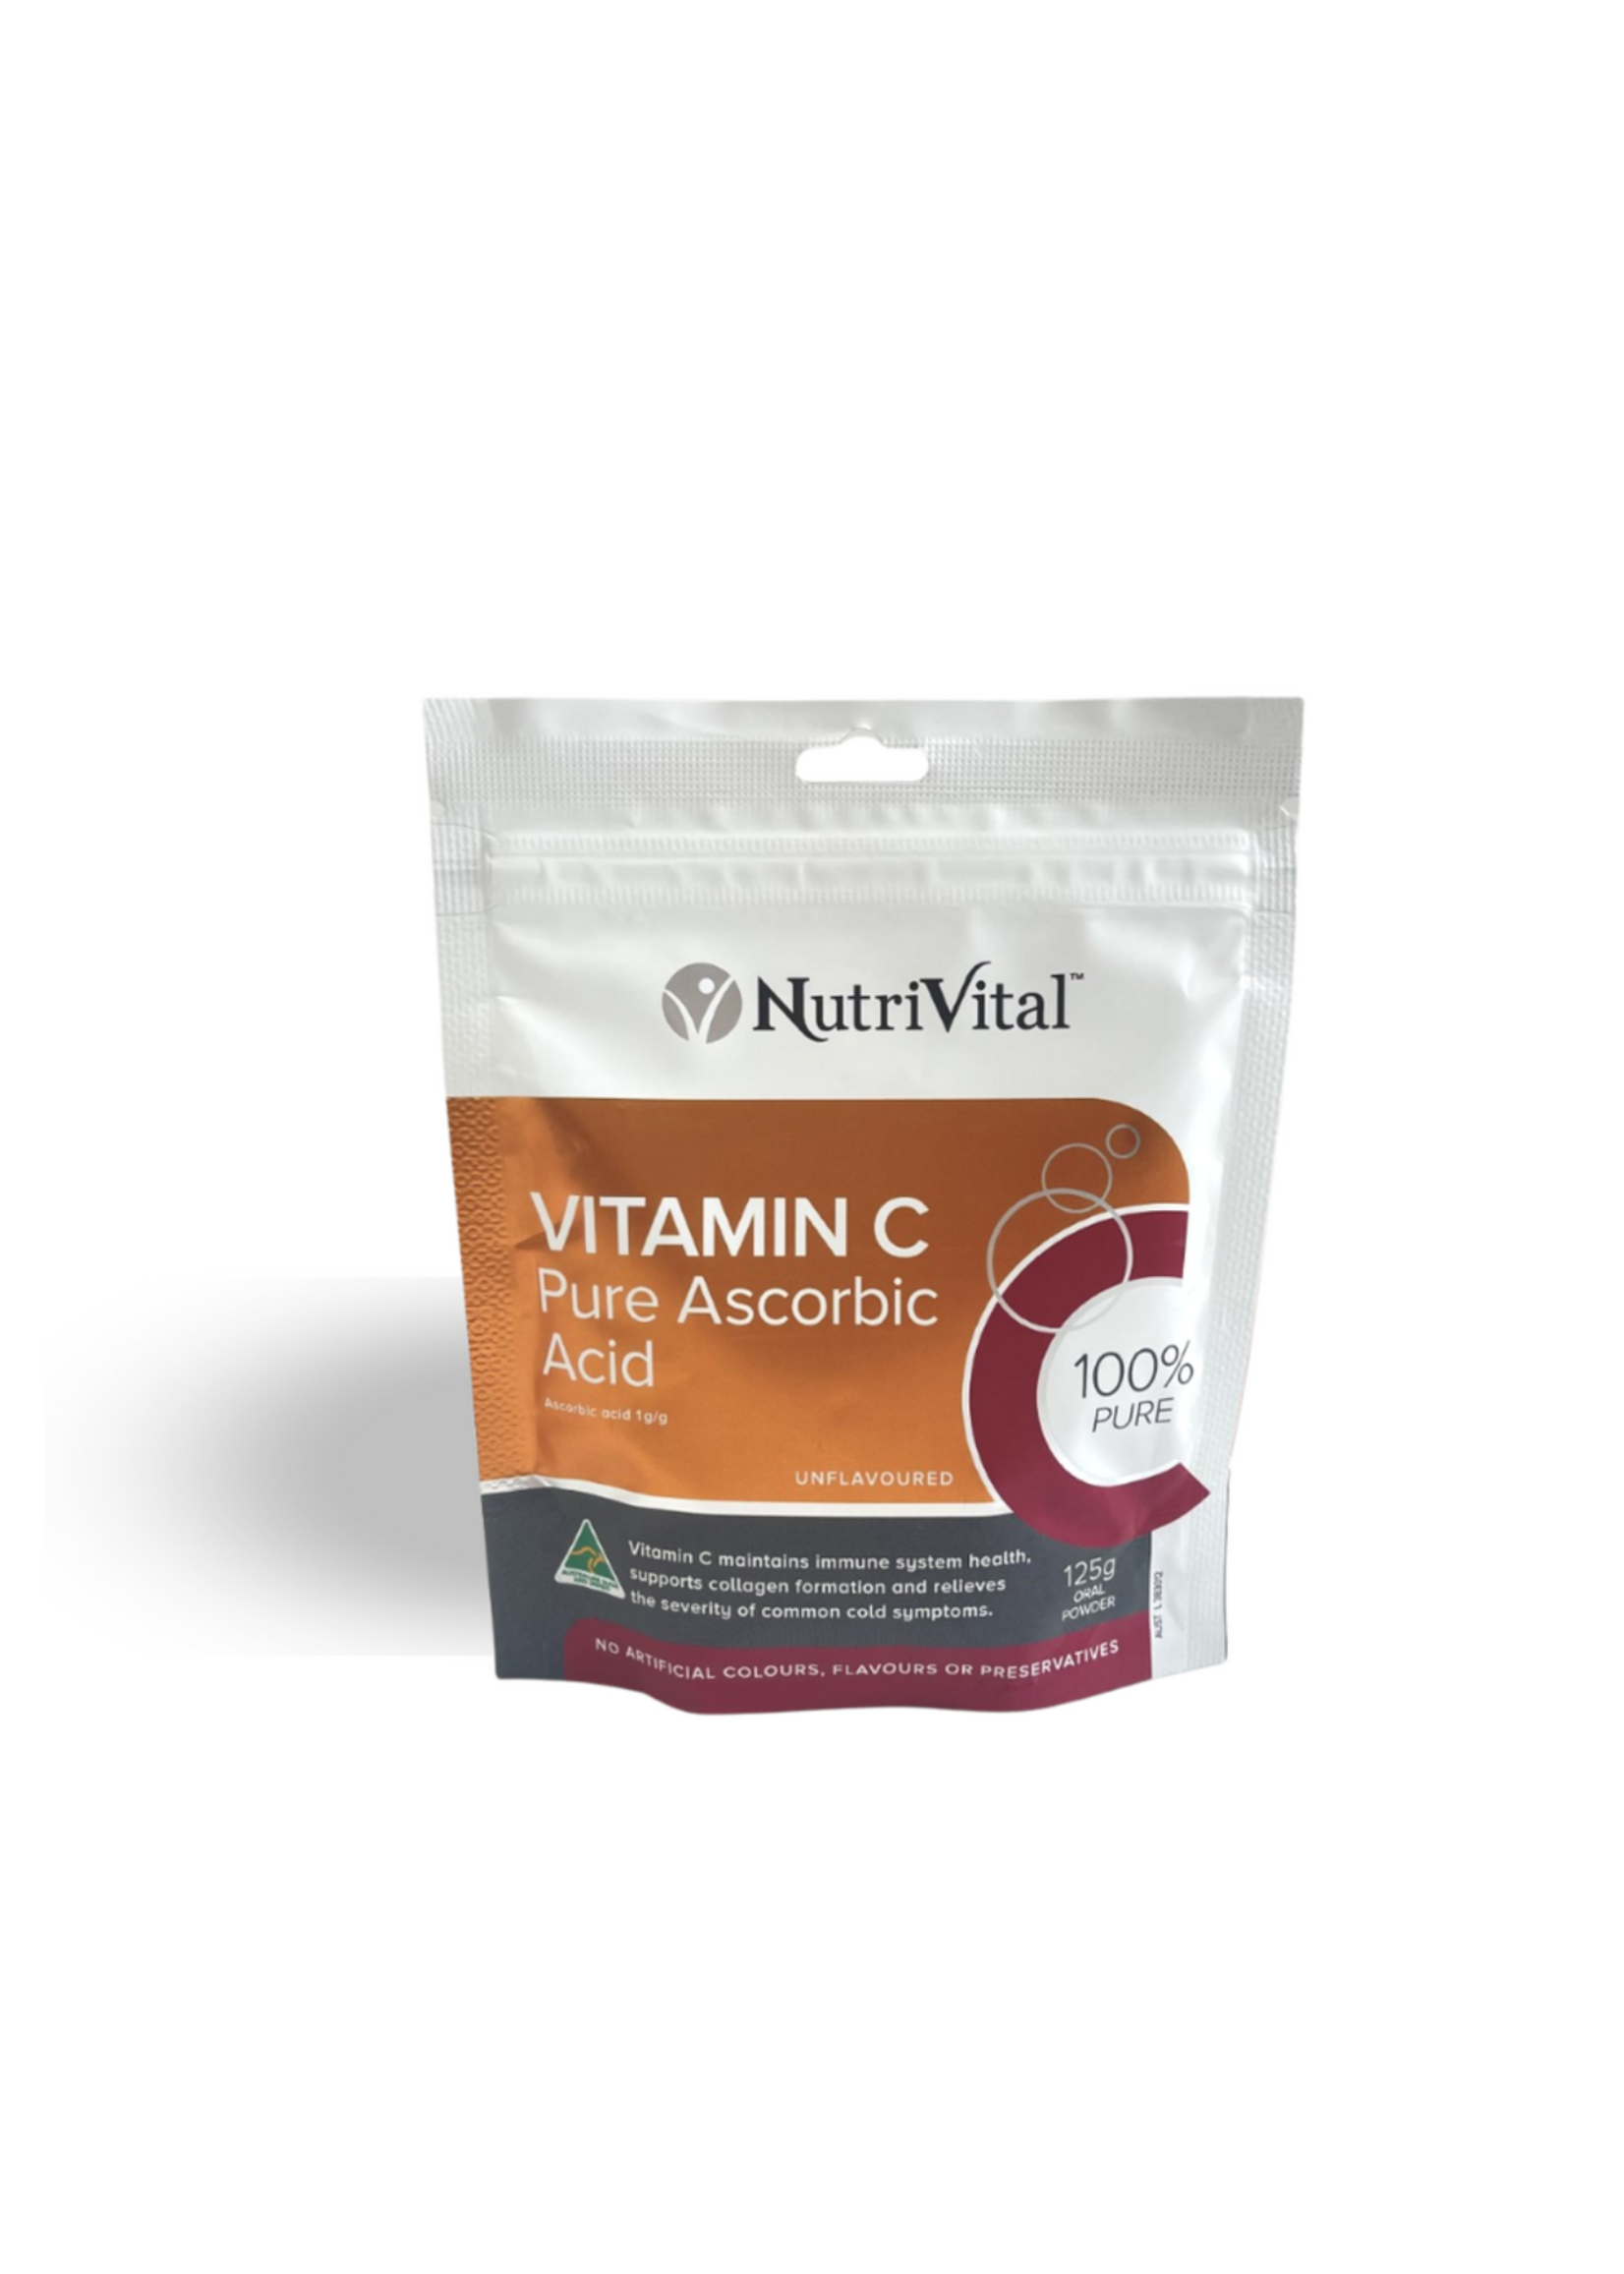 Nutrivital NutriVital Vitamin C Ascorbic Acid 125